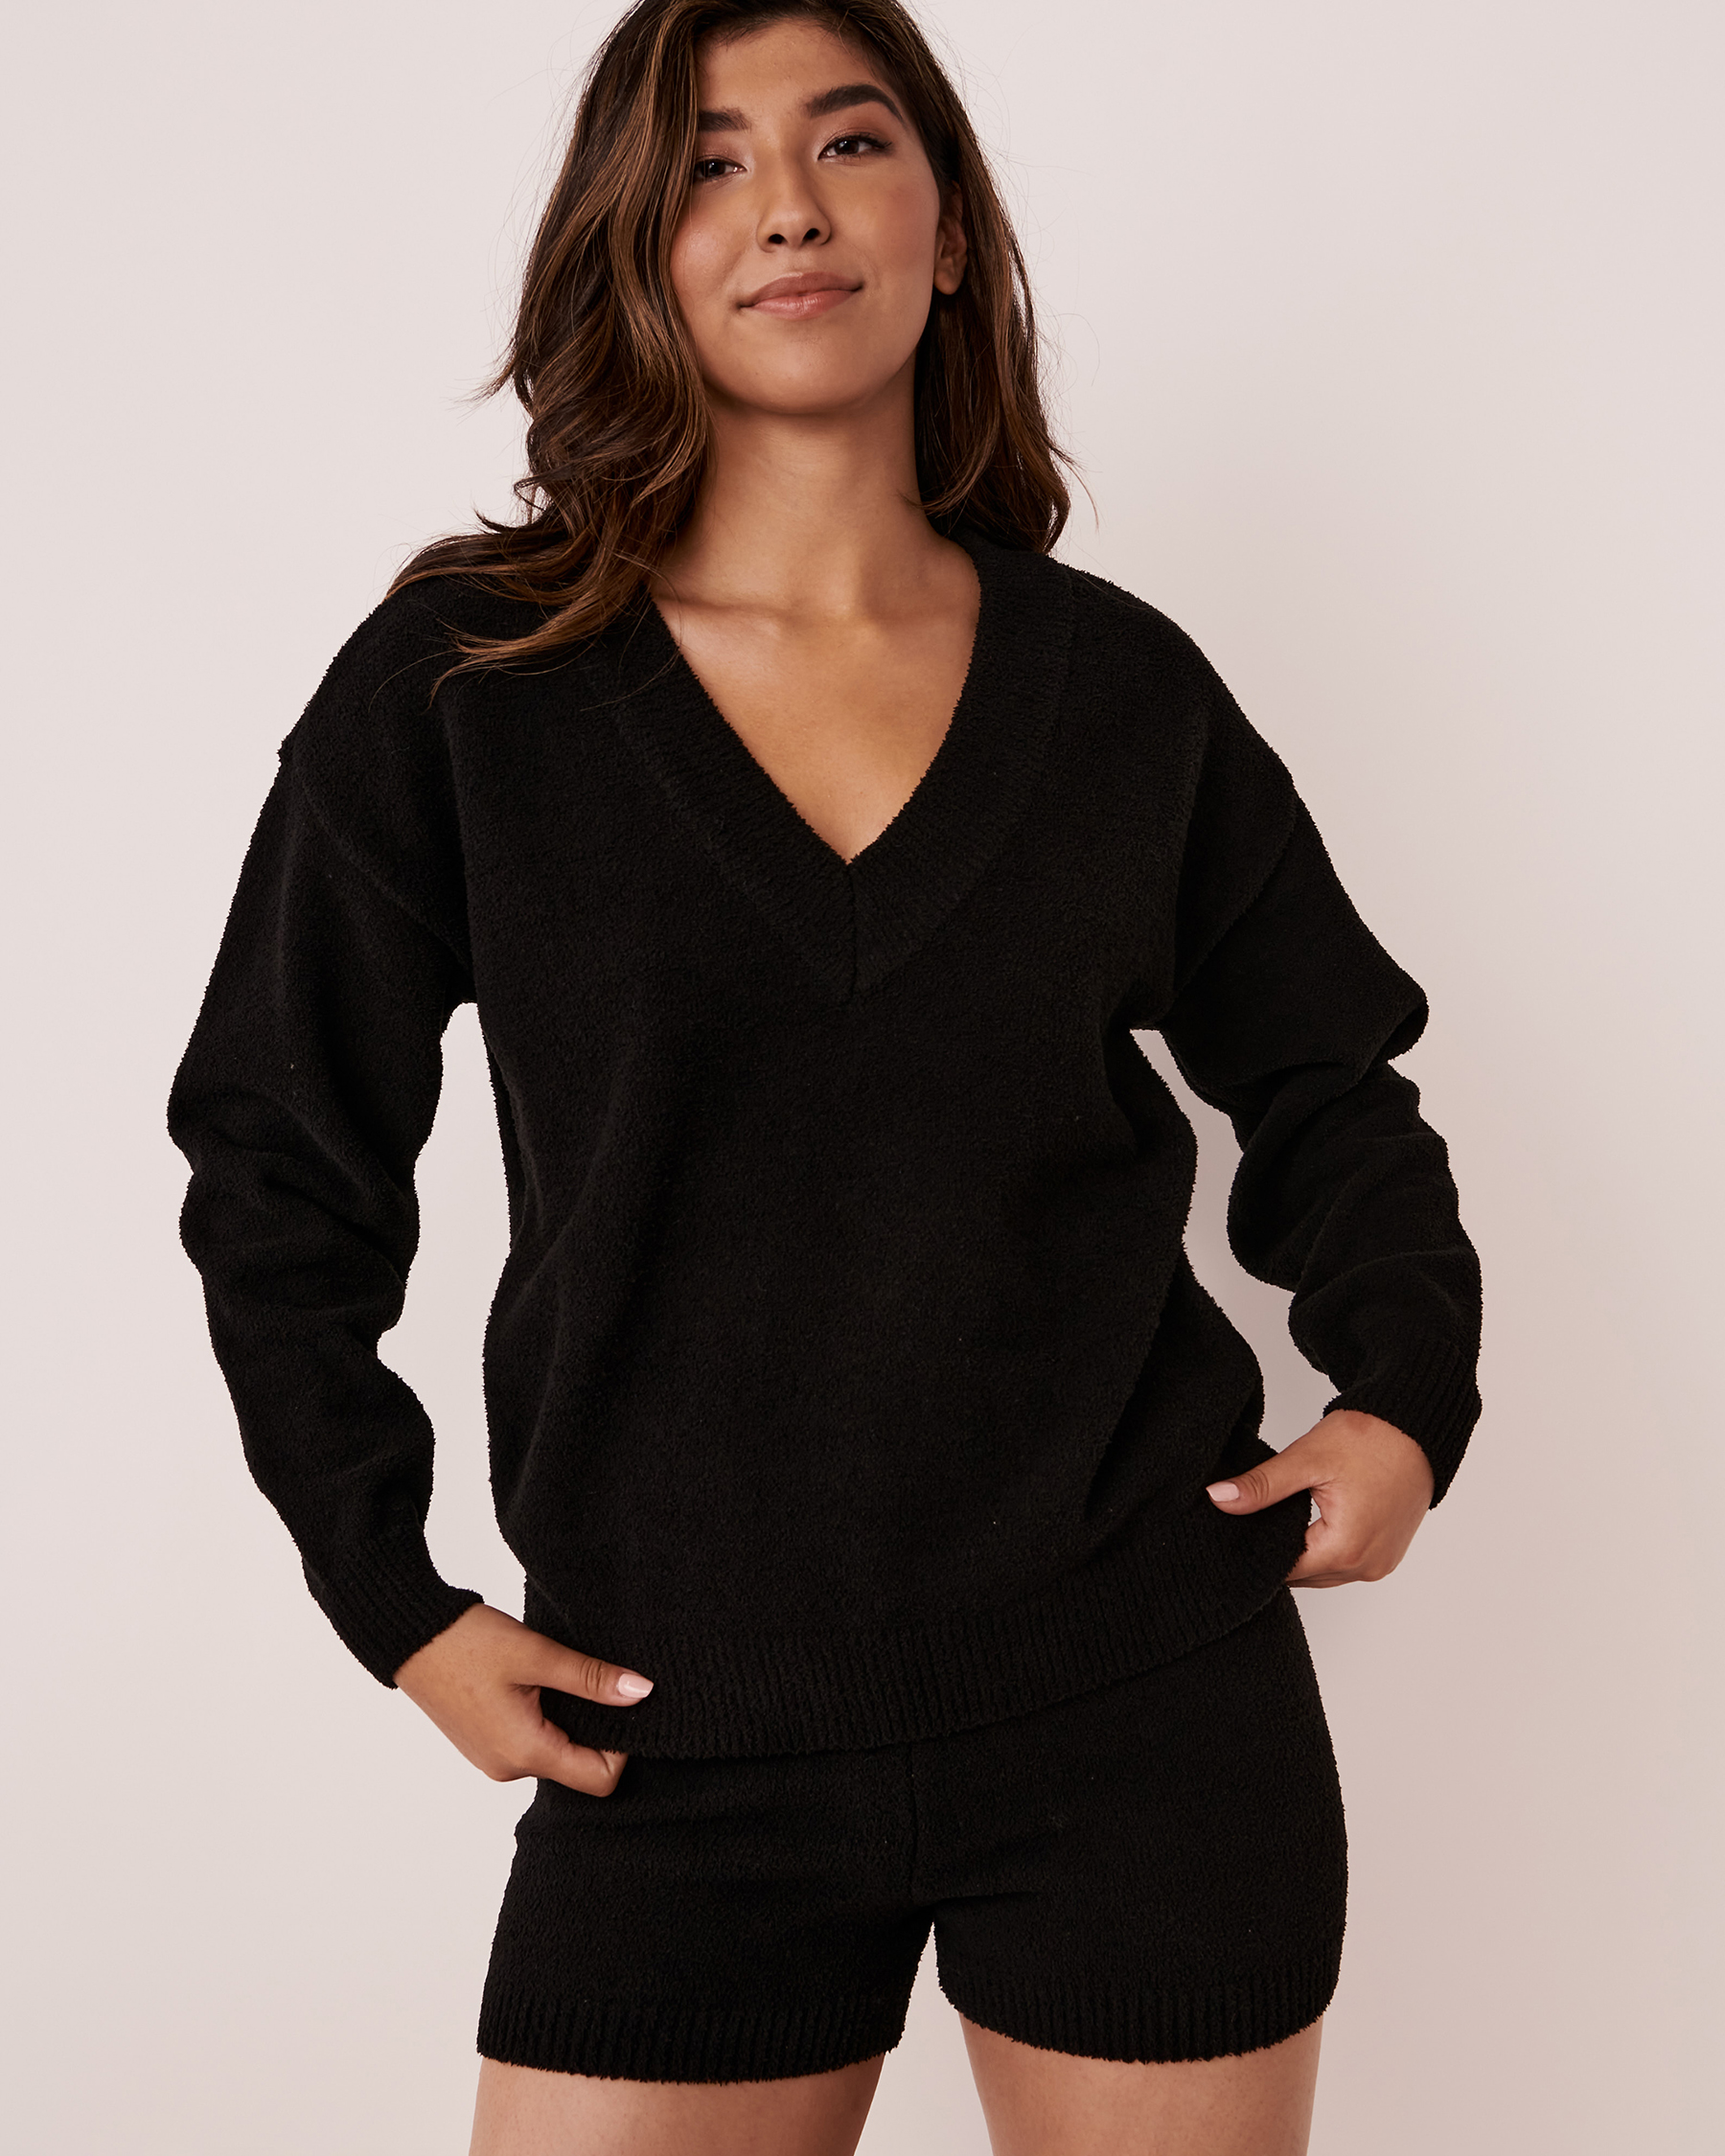 LA VIE EN ROSE Chenille Varsity Long Sleeve Shirt Black 50100050 - View1